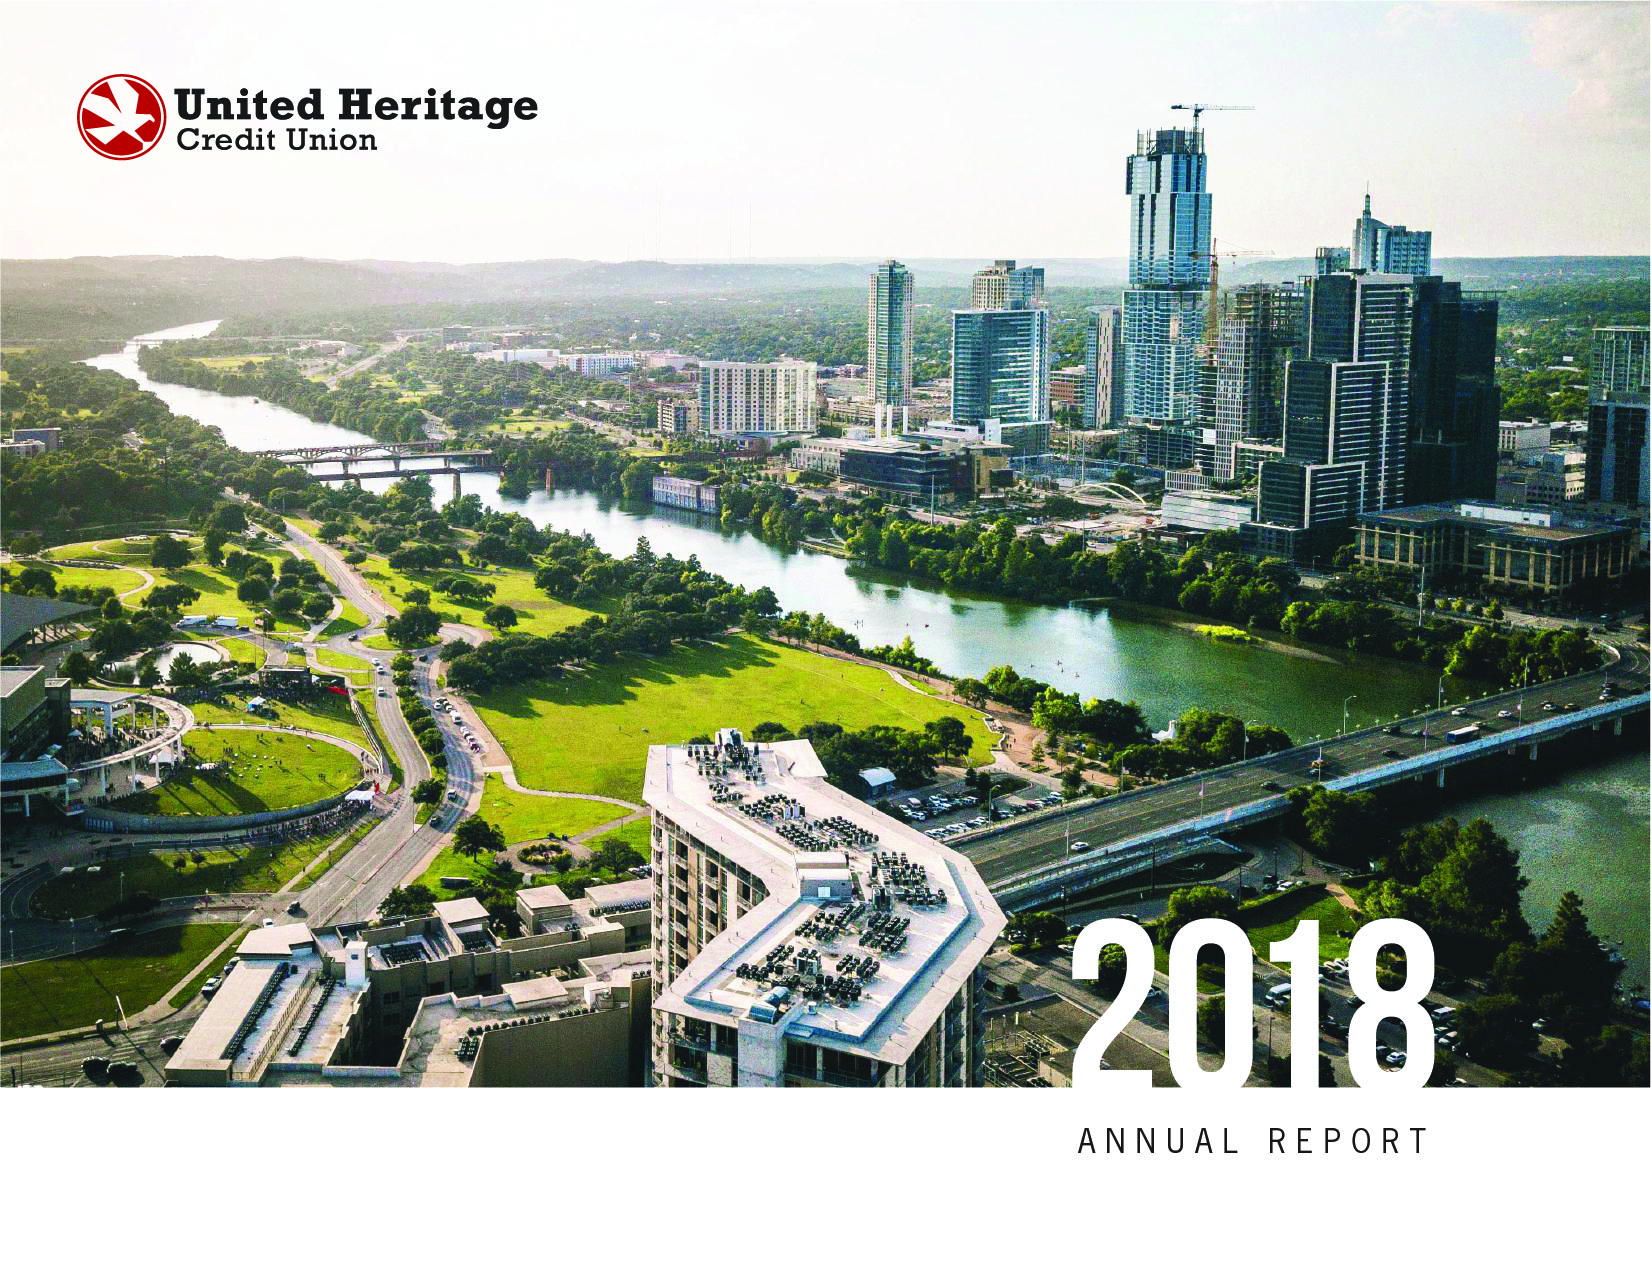 Vega Digital Awards Winner - UHCU 2018 Annual Report, United Heritage Credit Union